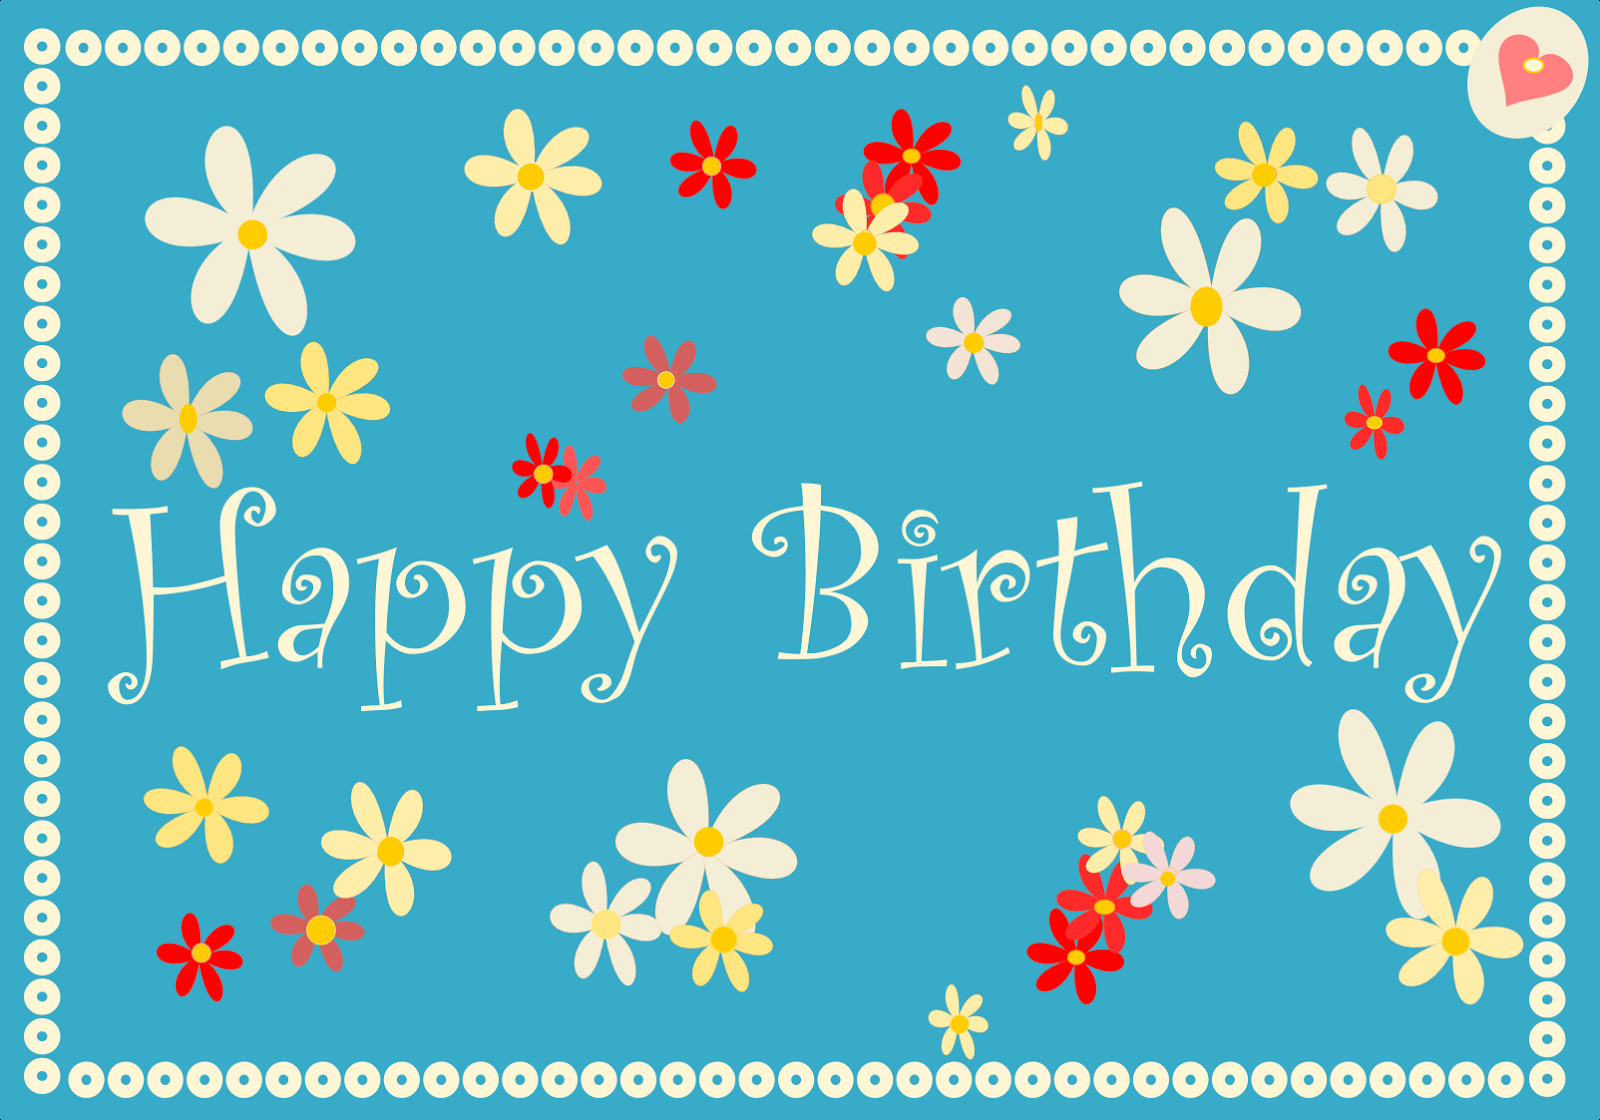 Free Online Printable Birthday Cards | Dozor - Free Online Printable Birthday Cards